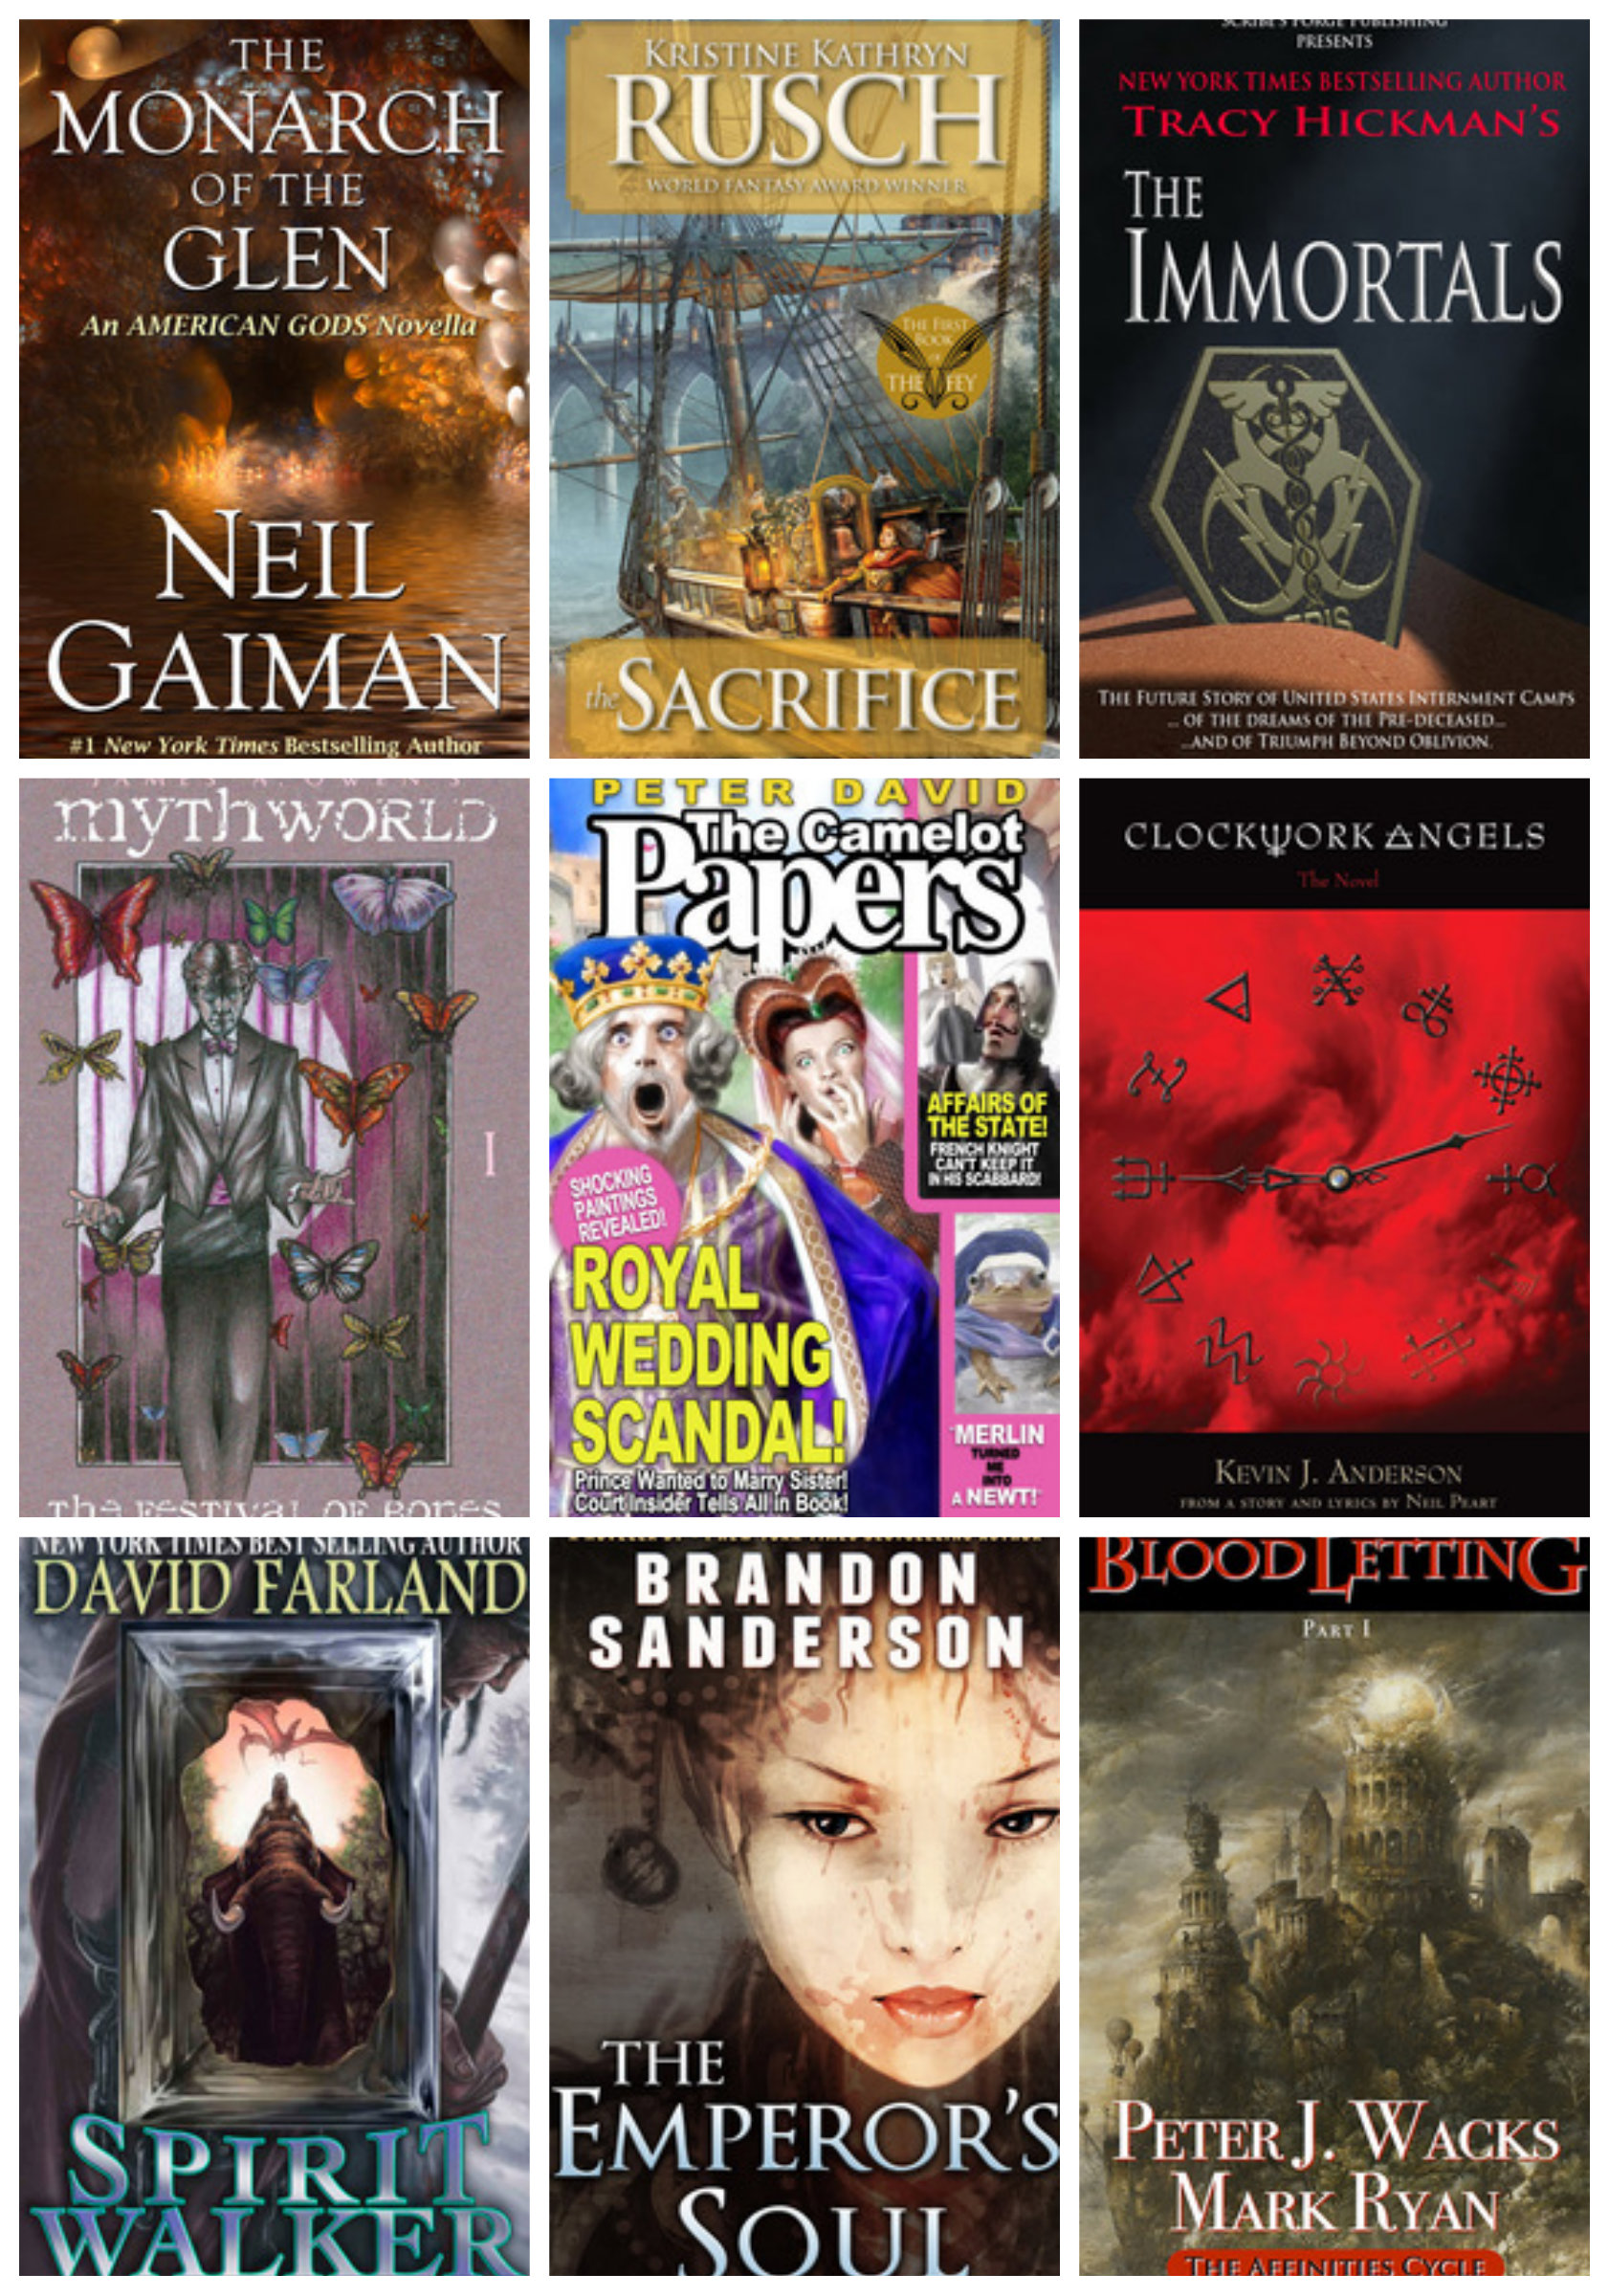 New ebook bundle from StoryBundle features Neil Gaiman’s novella